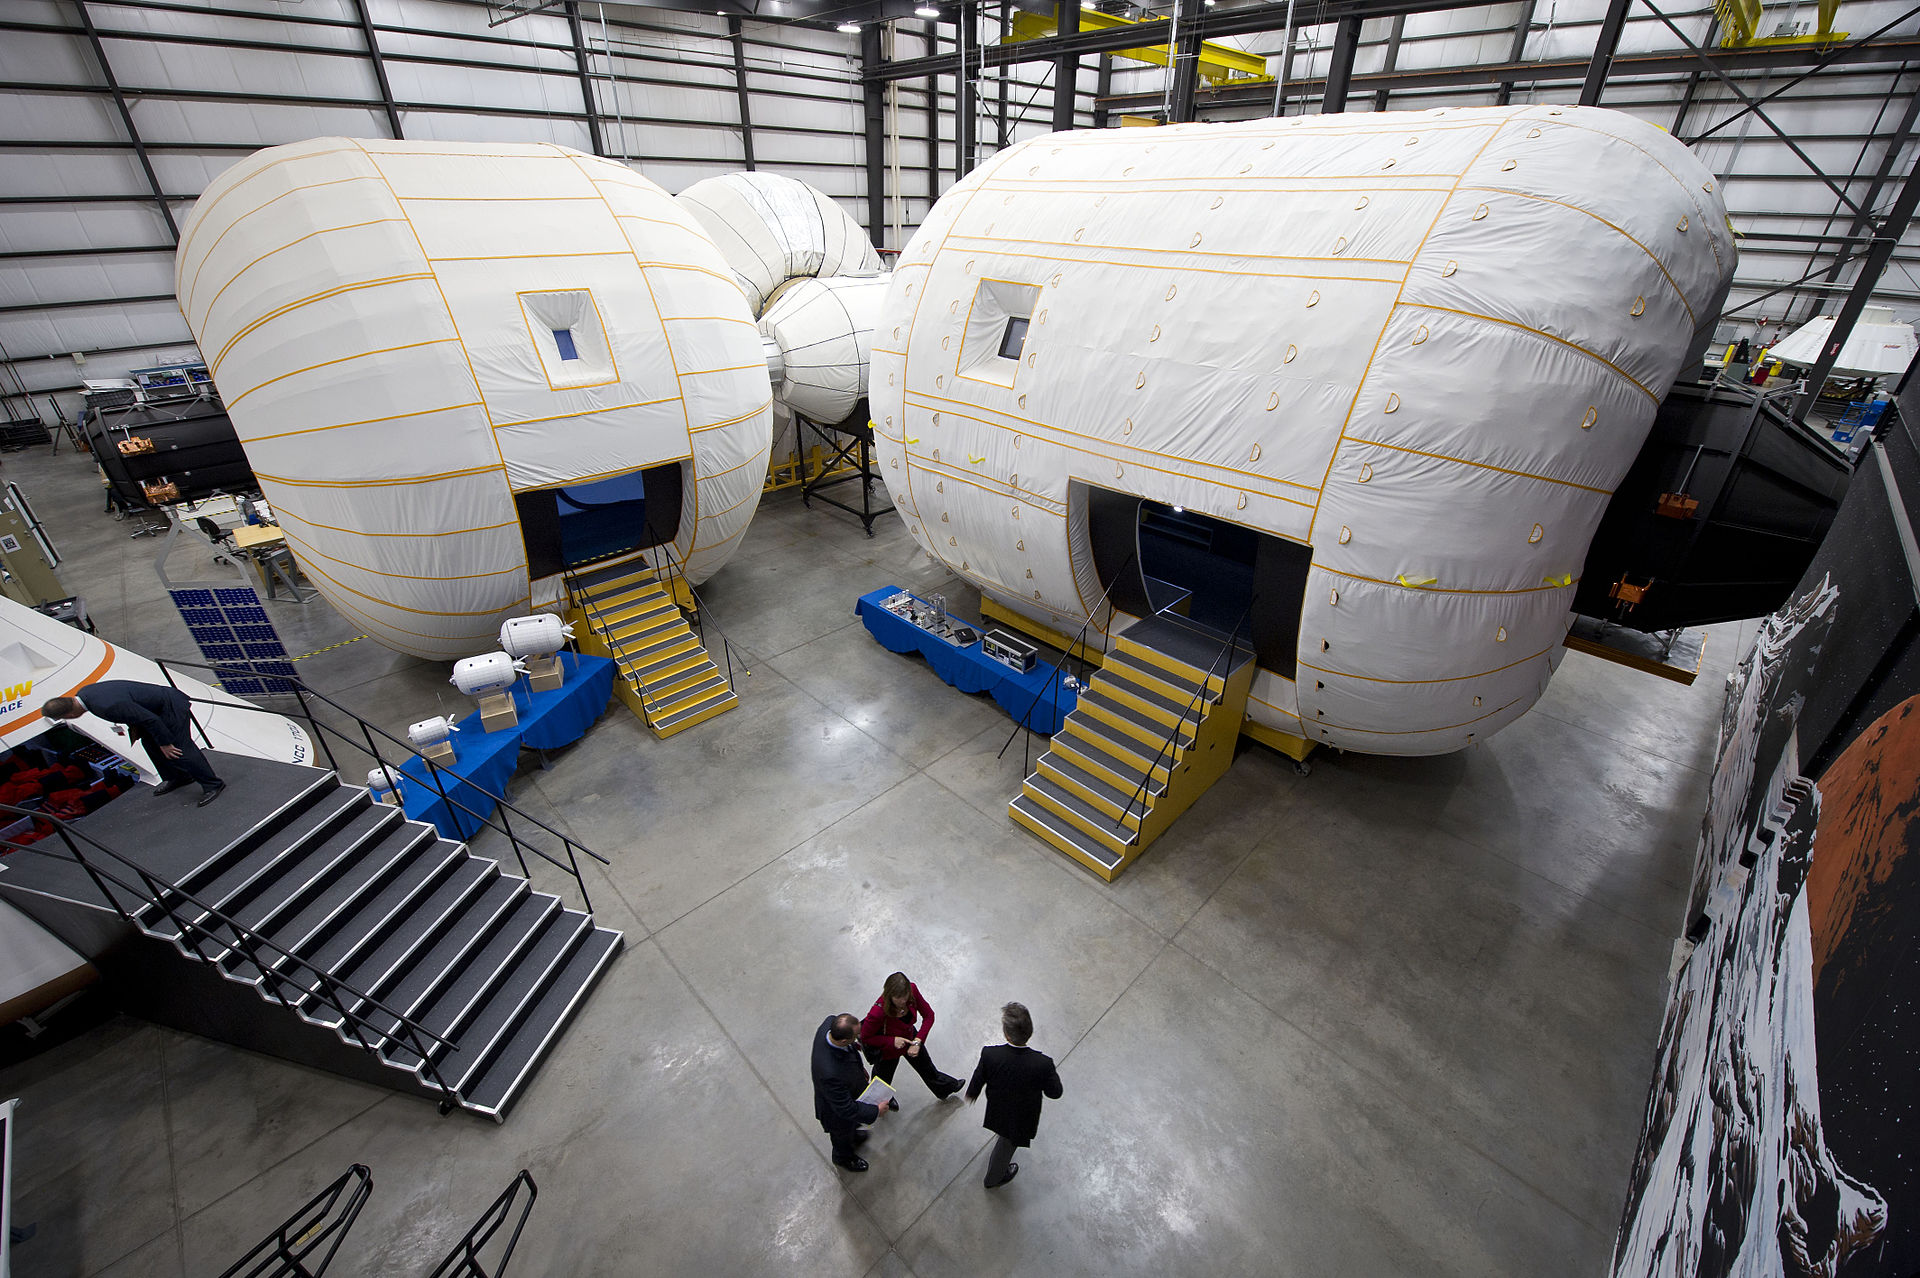 NASA Deputy Administrator Lori Garver is given a tour of the Bigelow Aerospace facilities by the company's President Robert Bigelow. Credit: NASA/Bill Ingalls/Bigelow Aerospace